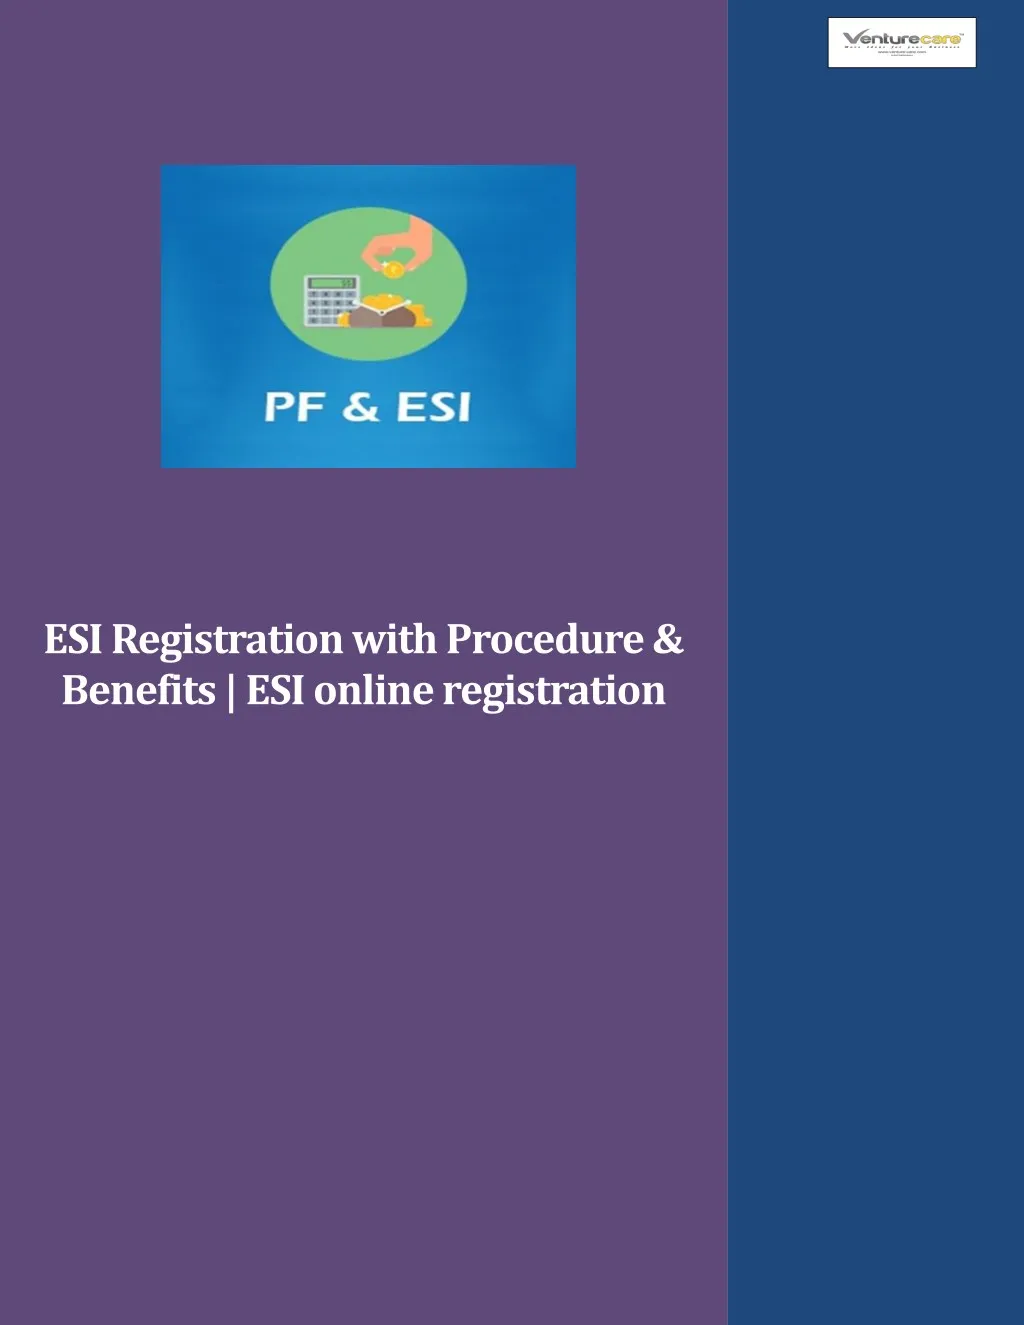 esi registration with procedure benefits